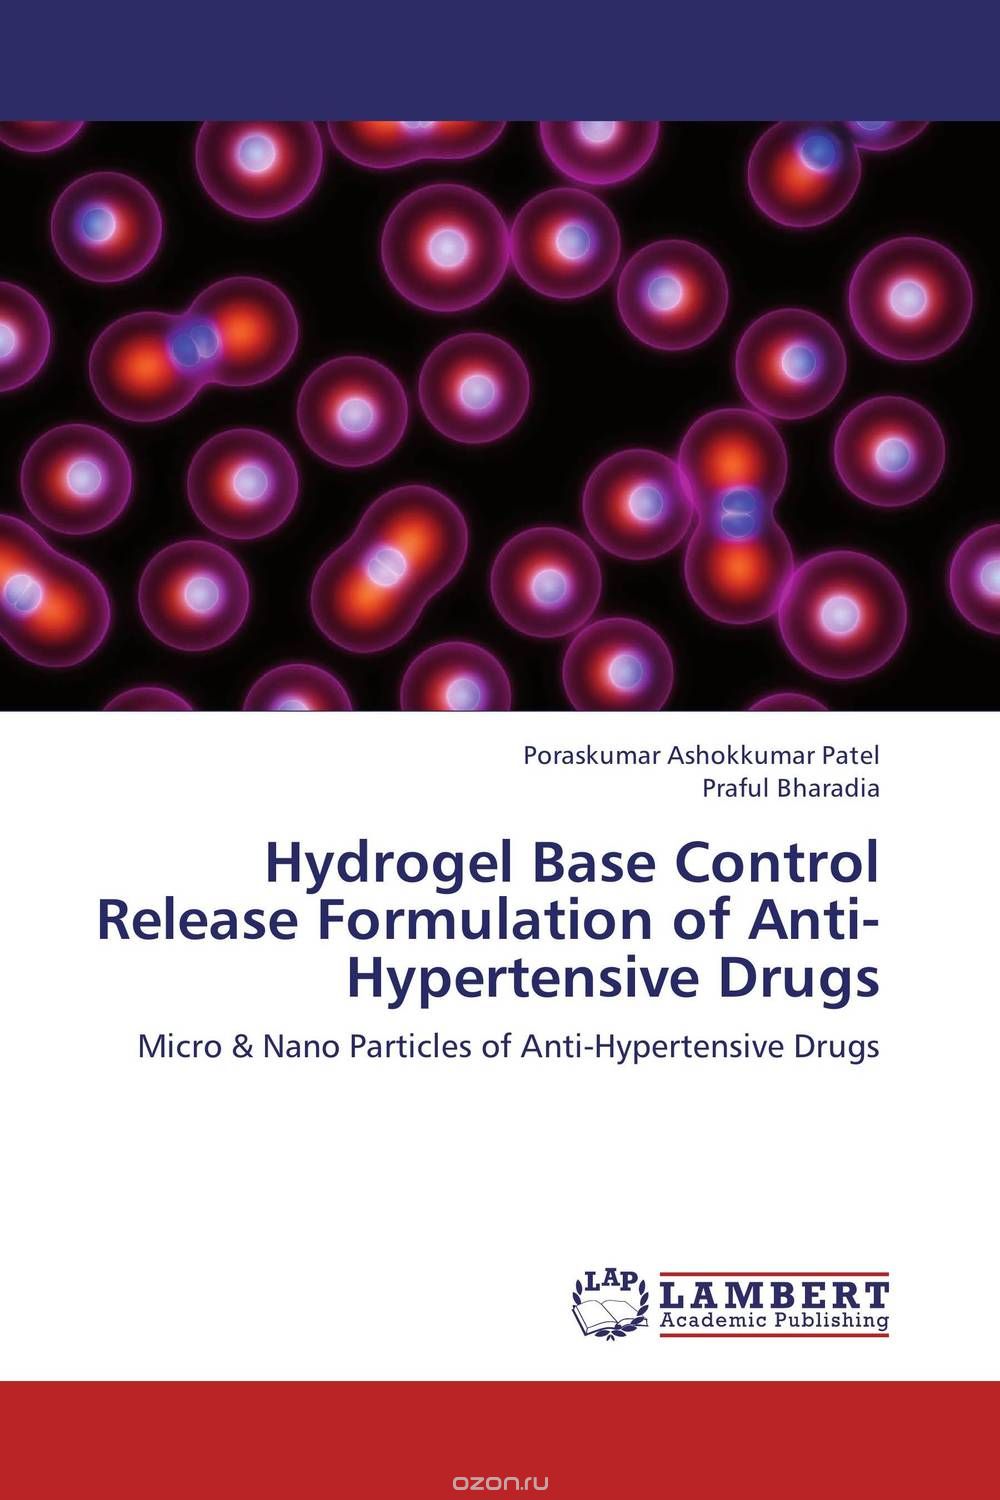 Скачать книгу "Hydrogel Base Control Release Formulation of Anti-Hypertensive Drugs"